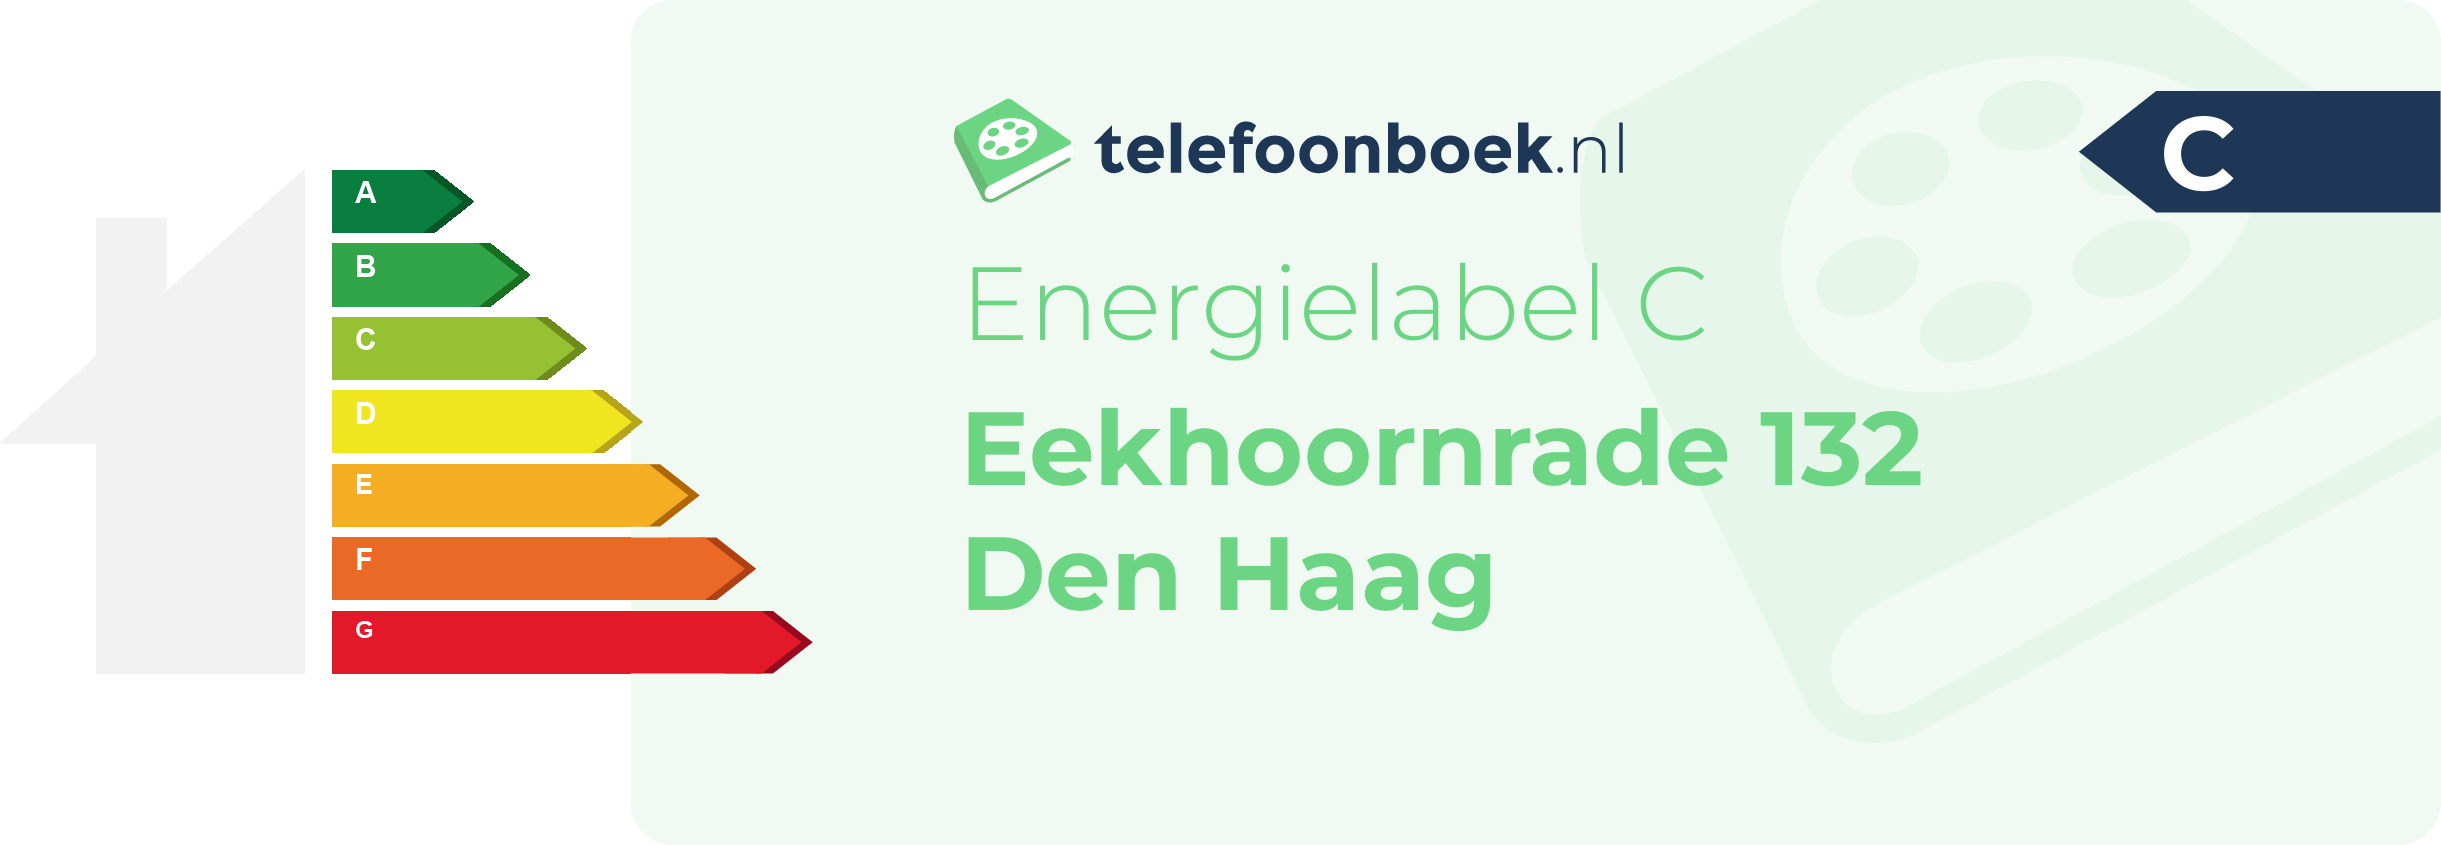 Energielabel Eekhoornrade 132 Den Haag